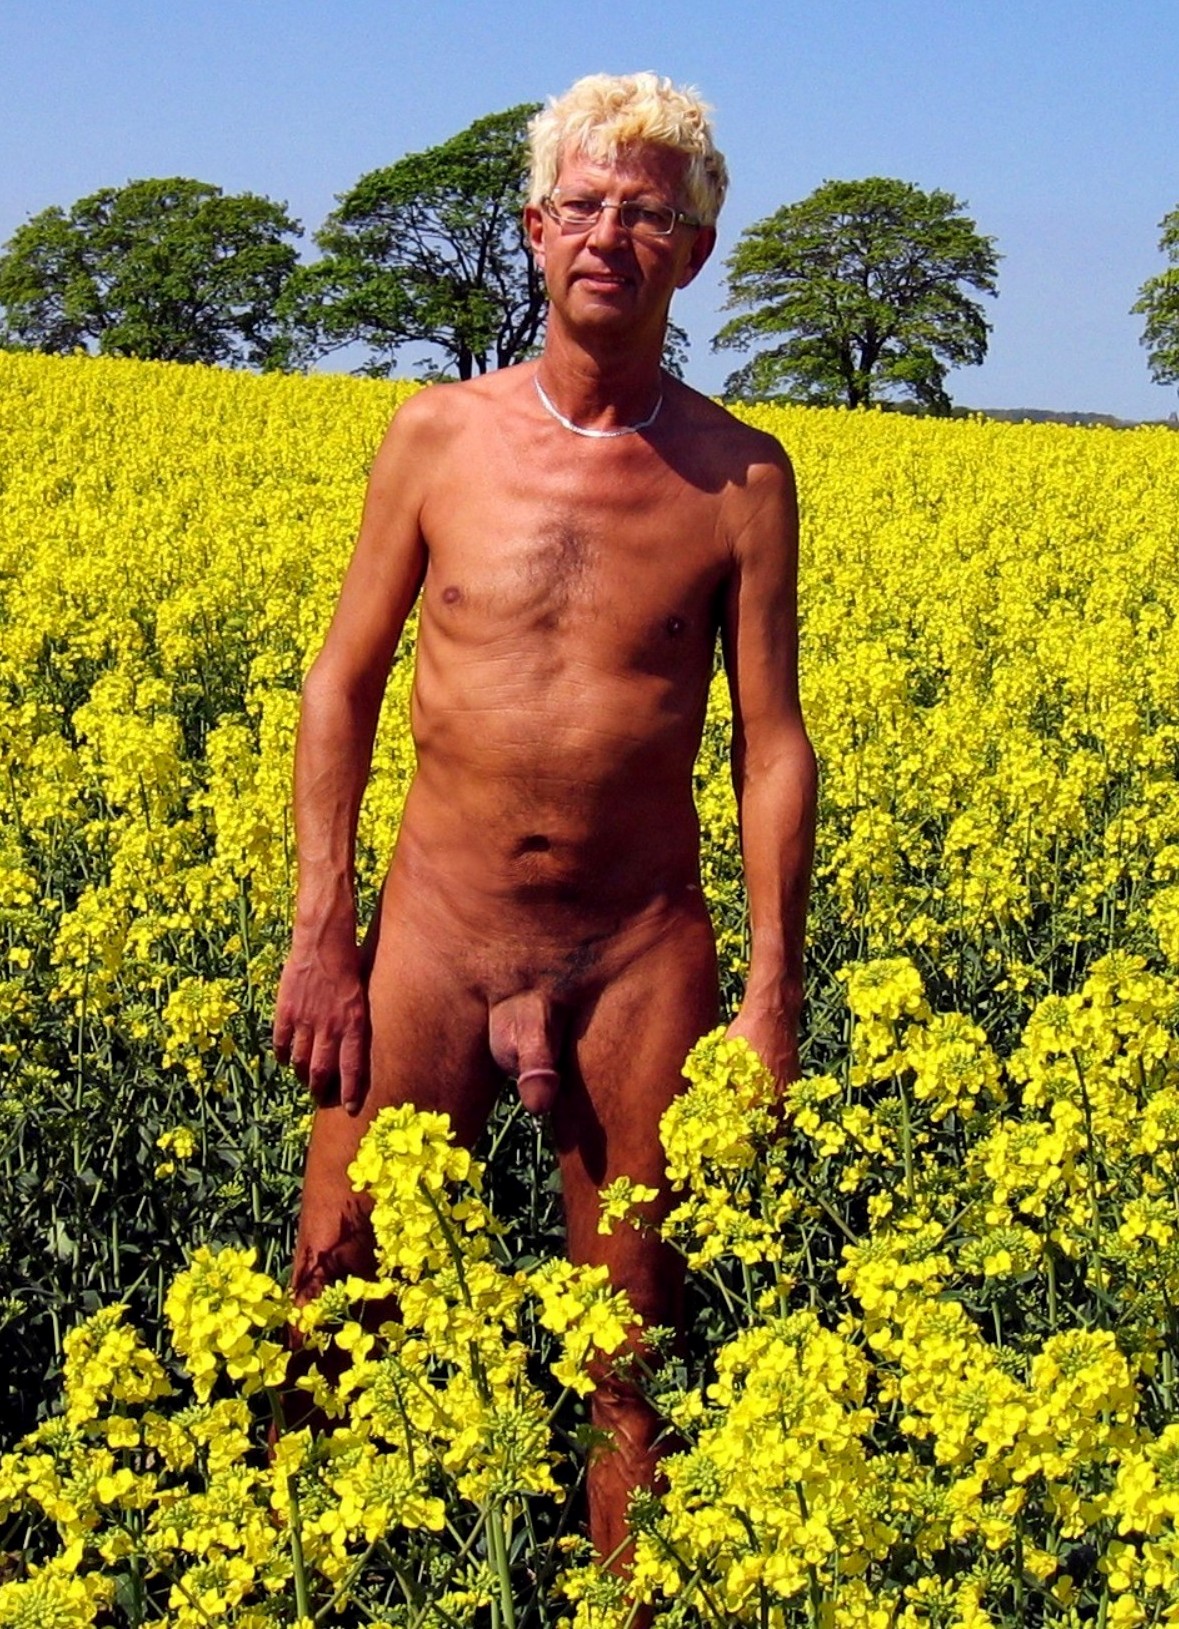 Norbert Kempe naked